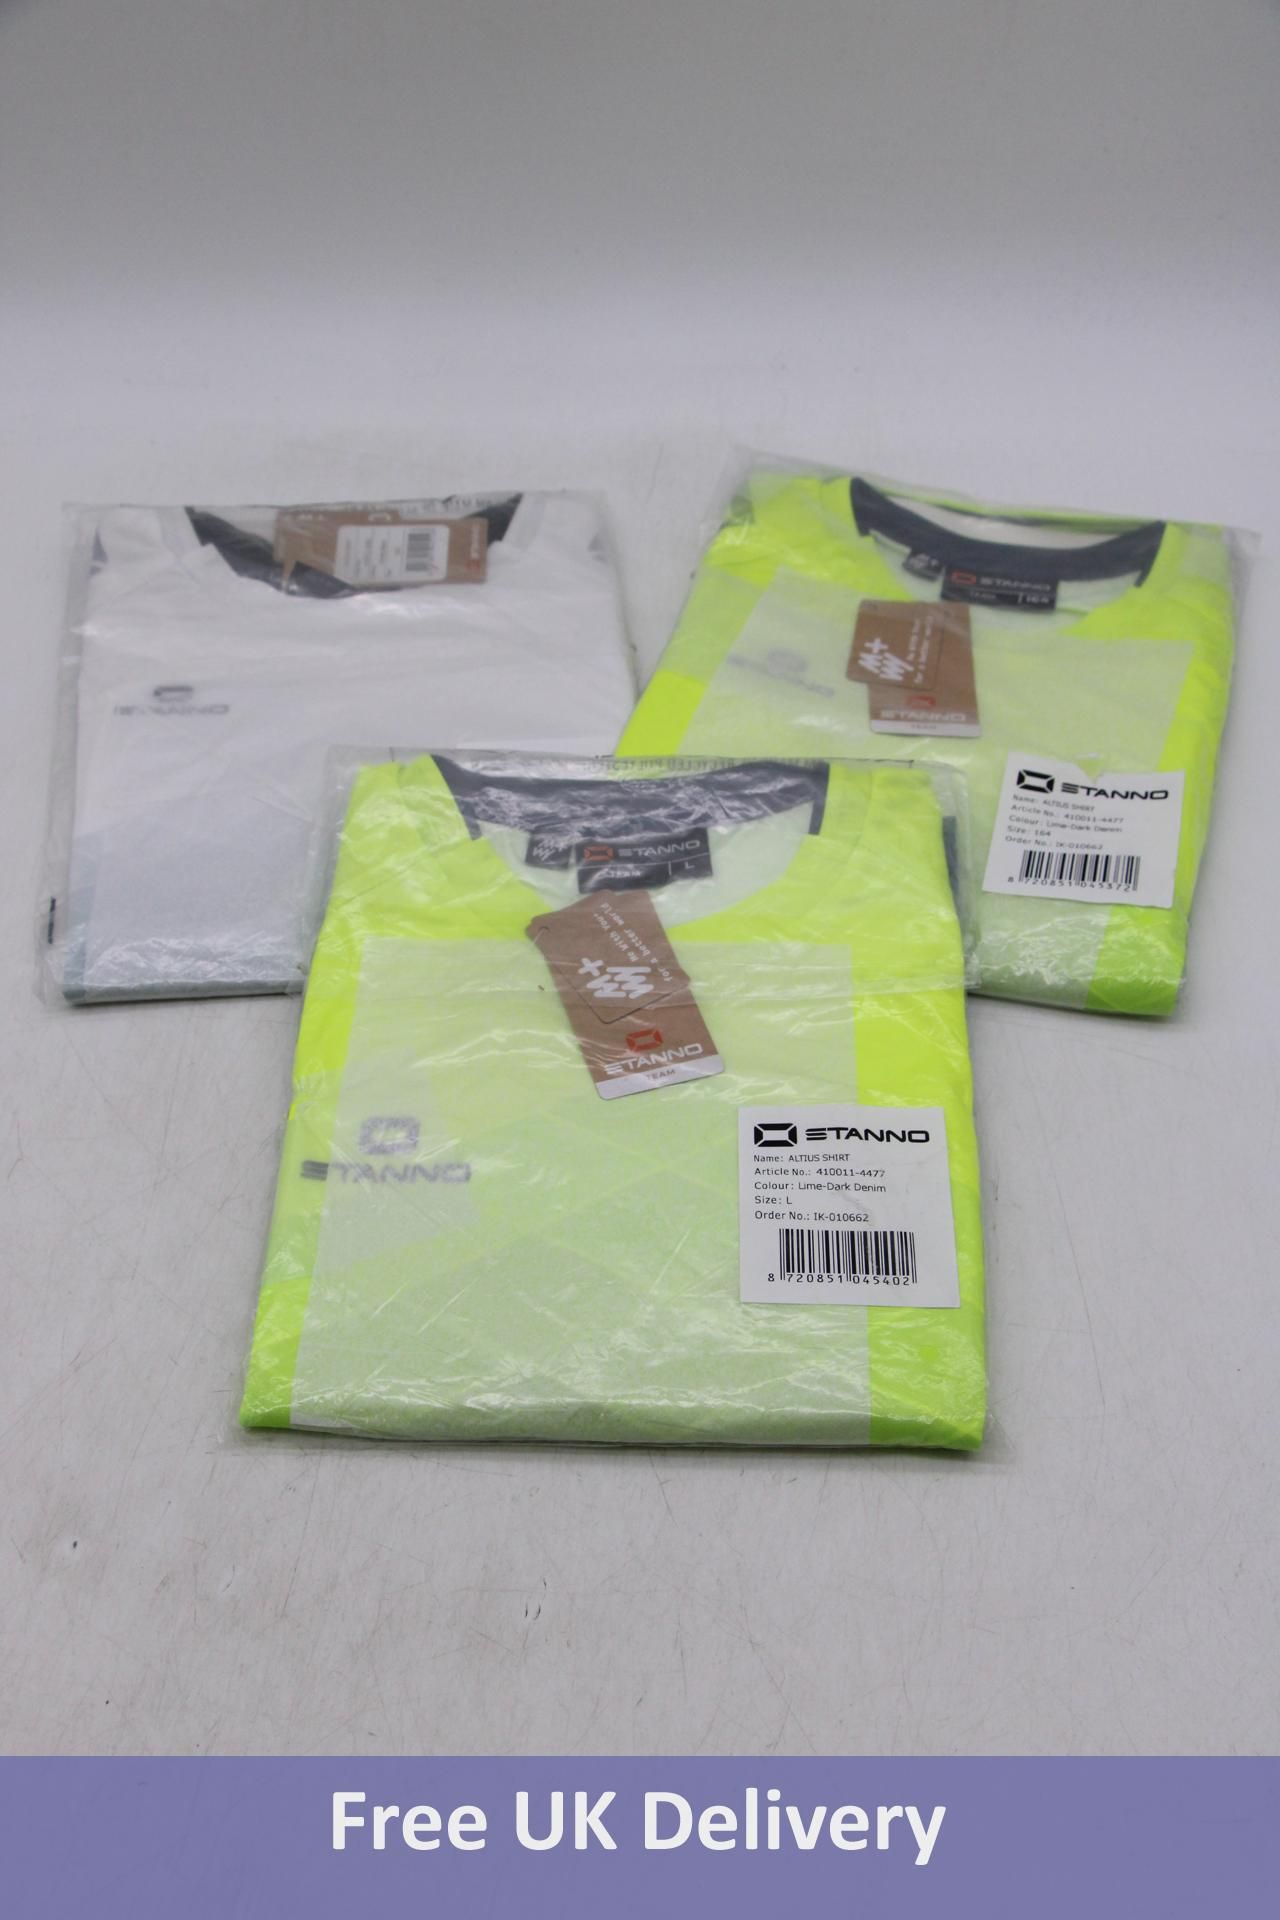 Three Stanno Altius Shirts to include 1x White/Black, Size 152, 1x Lime/Dark Denim, Size L, 1x Lime